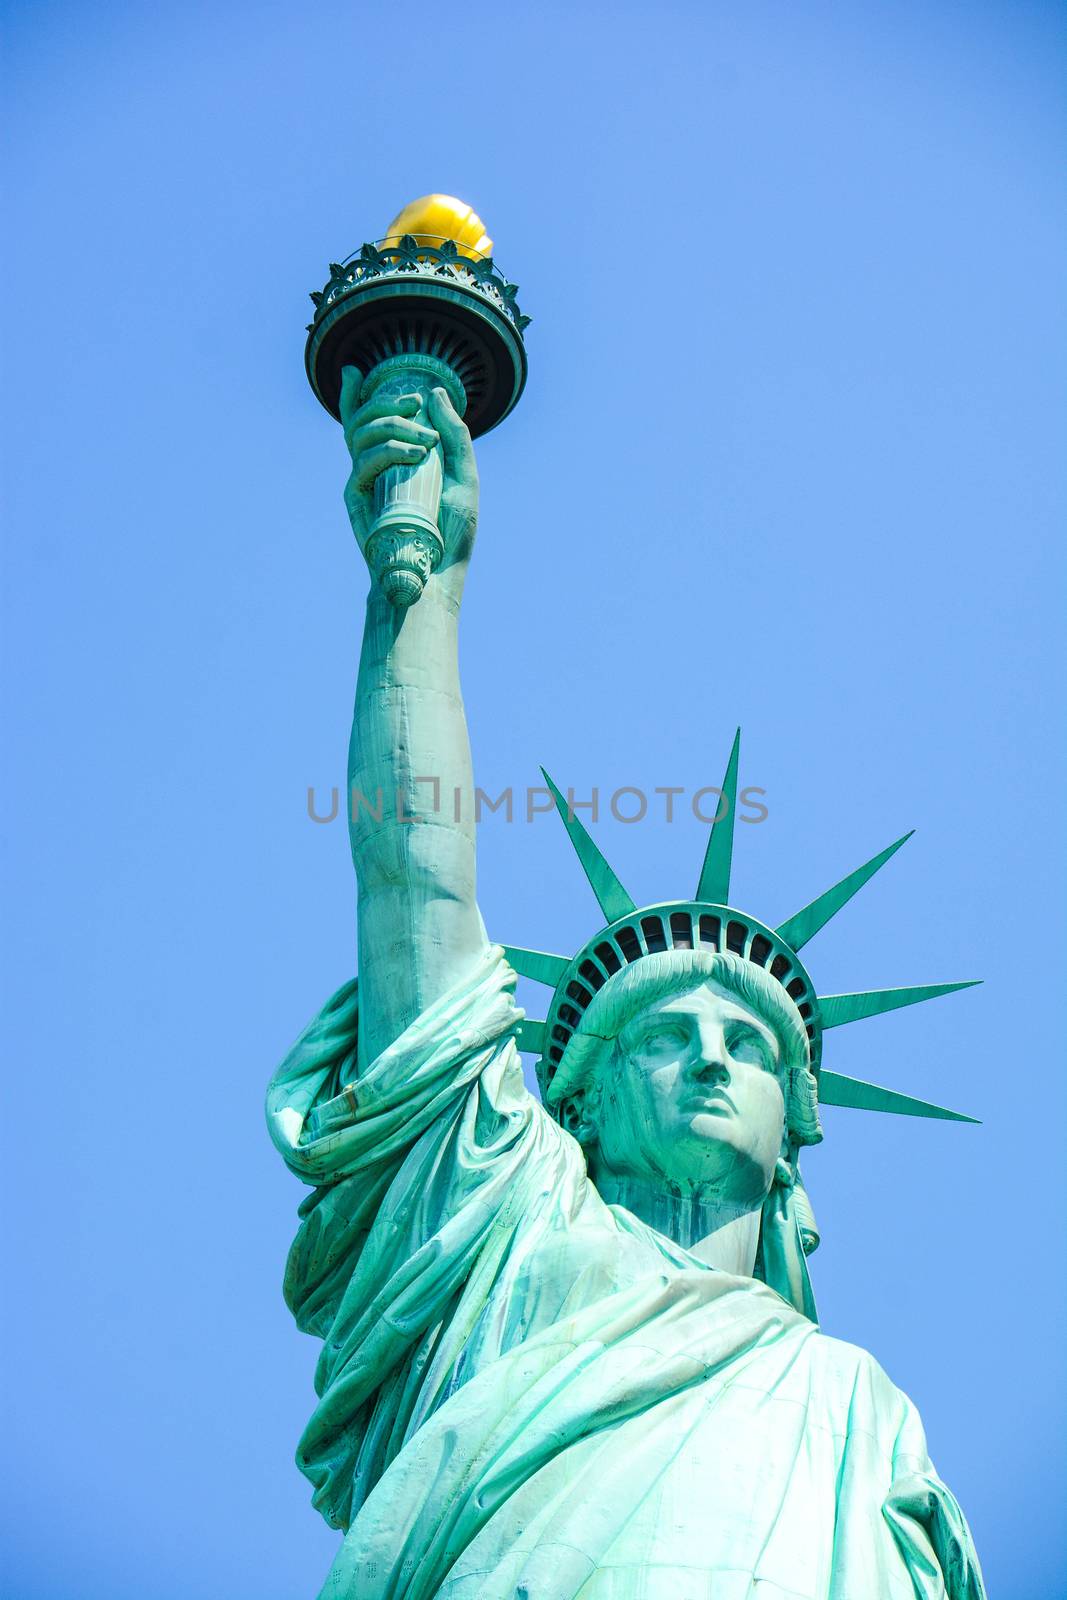 Lady Liberty original views of statue